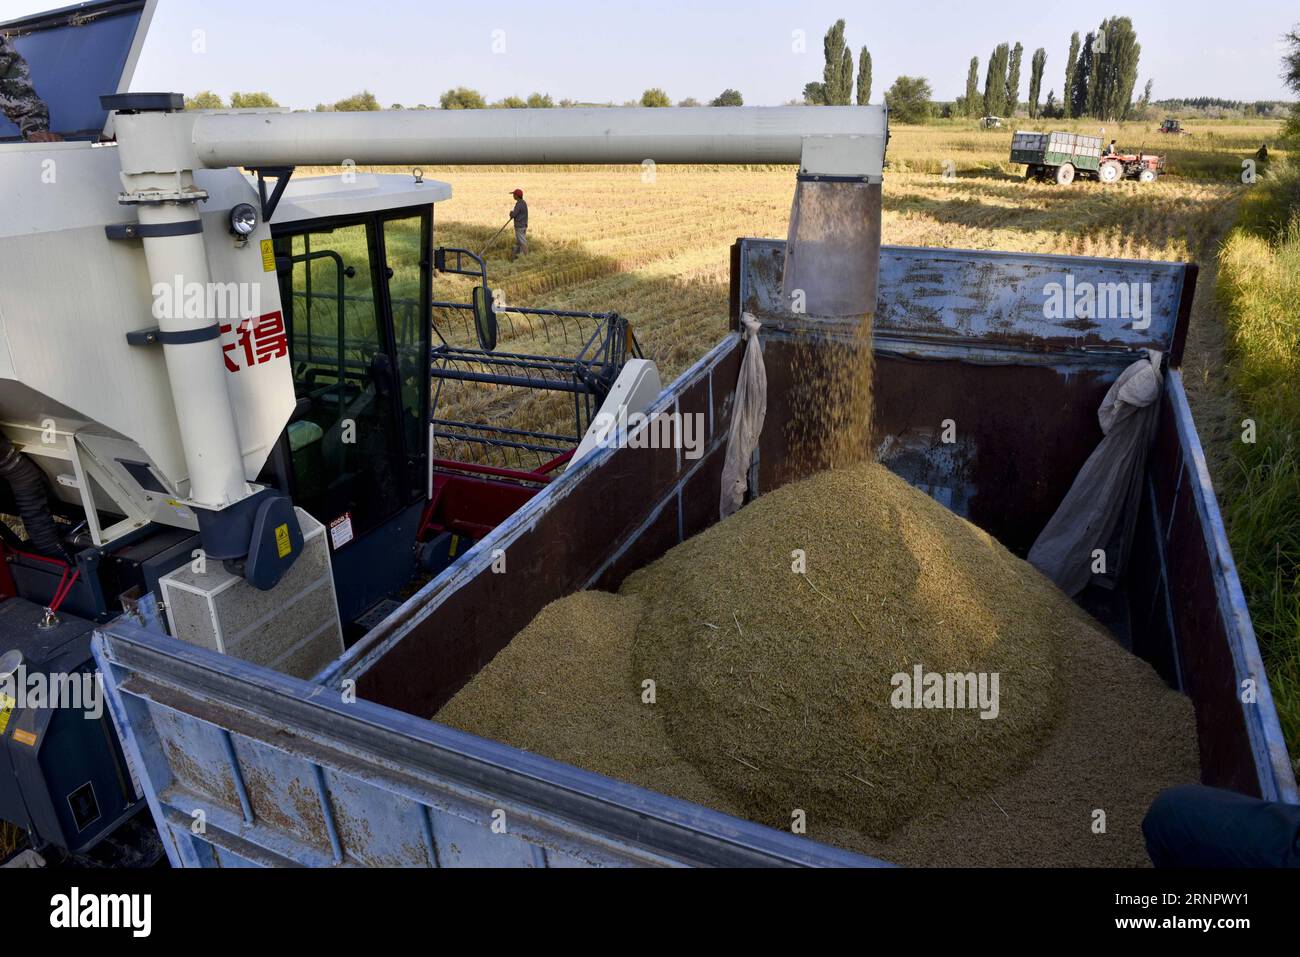 (170909) -- ILI, Sept. 9, 2017 -- Farmers load harvested rice at an organic rice field in Ili Kazakh Autonomous Prefecture, northwest China s Xinjiang Uygur Autonomous Region, Sept. 8, 2017. ) (wyo) CHINA-XINJIANG-ILI-RICE-HARVEST (CN) HuxHuhu PUBLICATIONxNOTxINxCHN Stock Photo